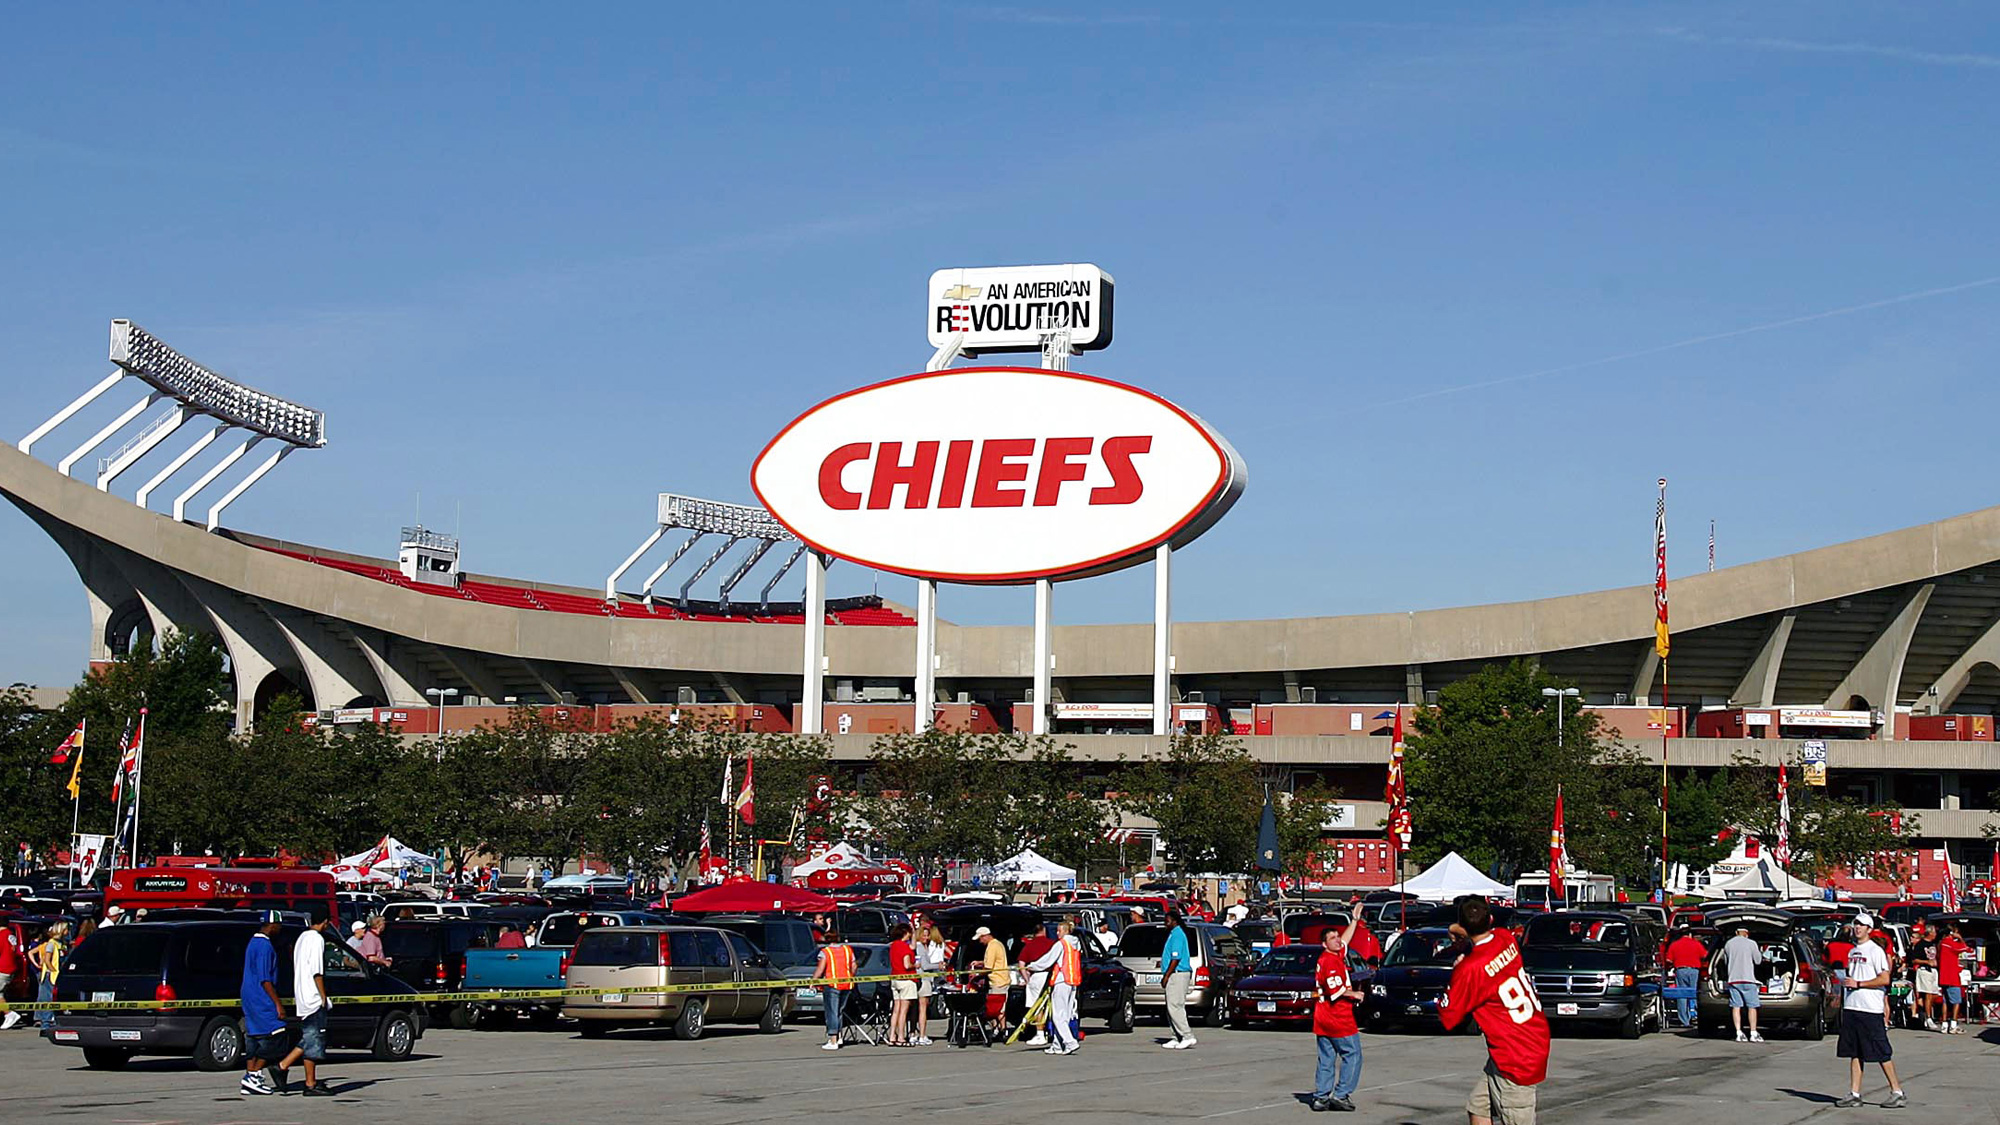 Kansas City Chiefs Scores, Stats and Highlights - ESPN